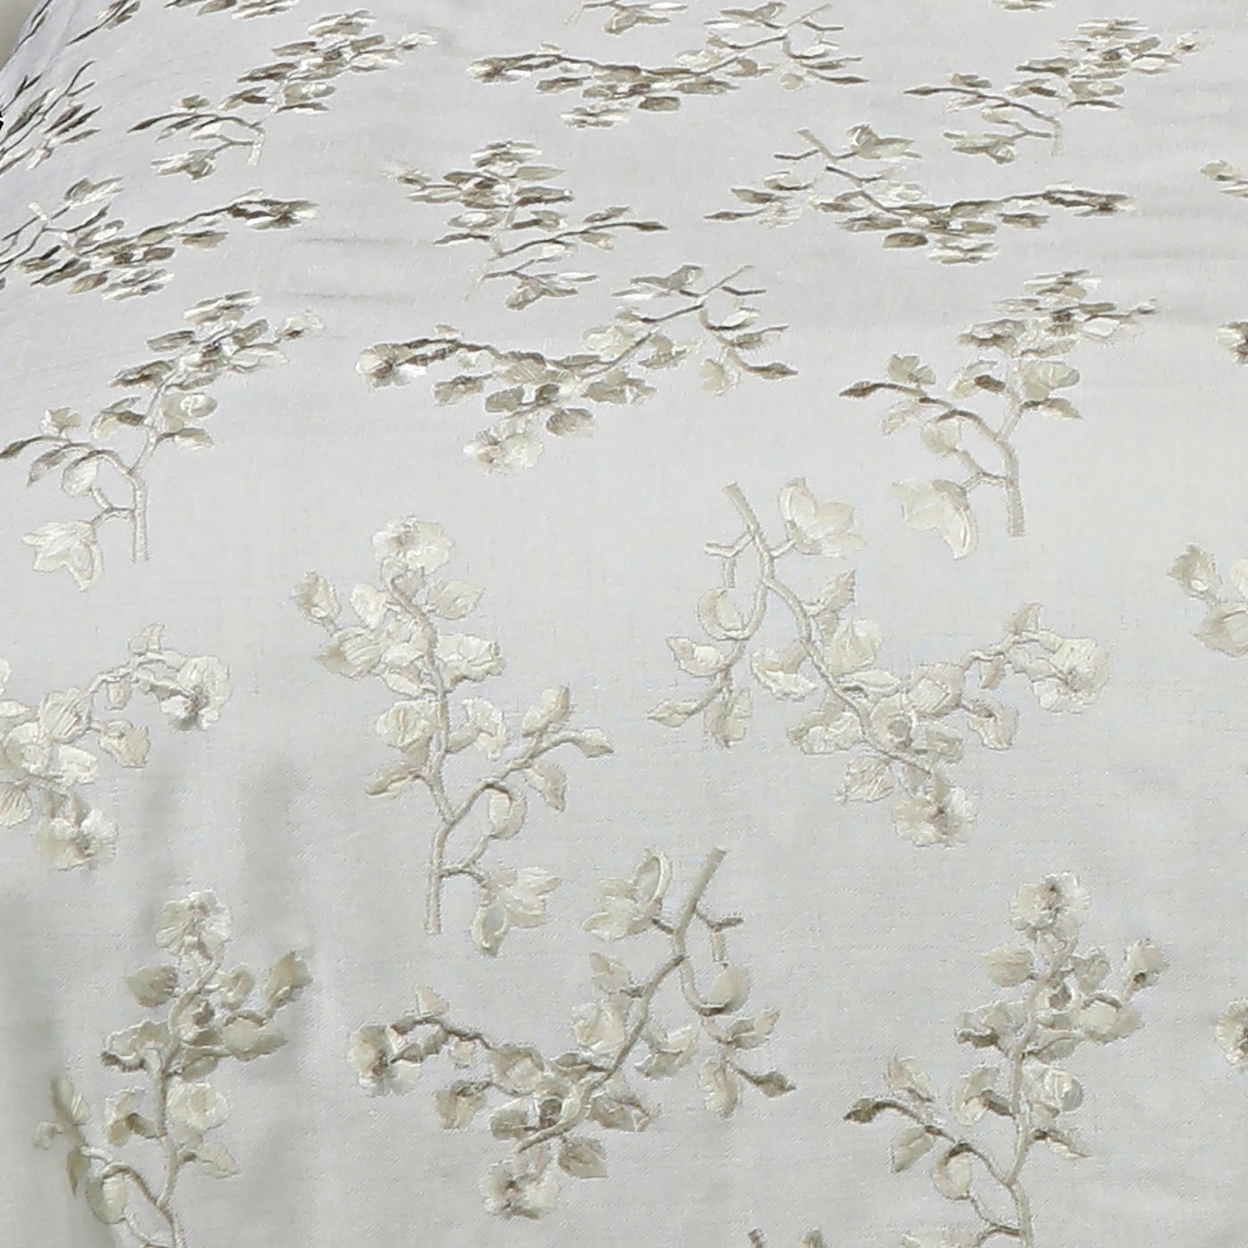 Zoey 10 Piece Polyester King Comforter Set, Gold Floral Design Print, White- Saltoro Sherpi